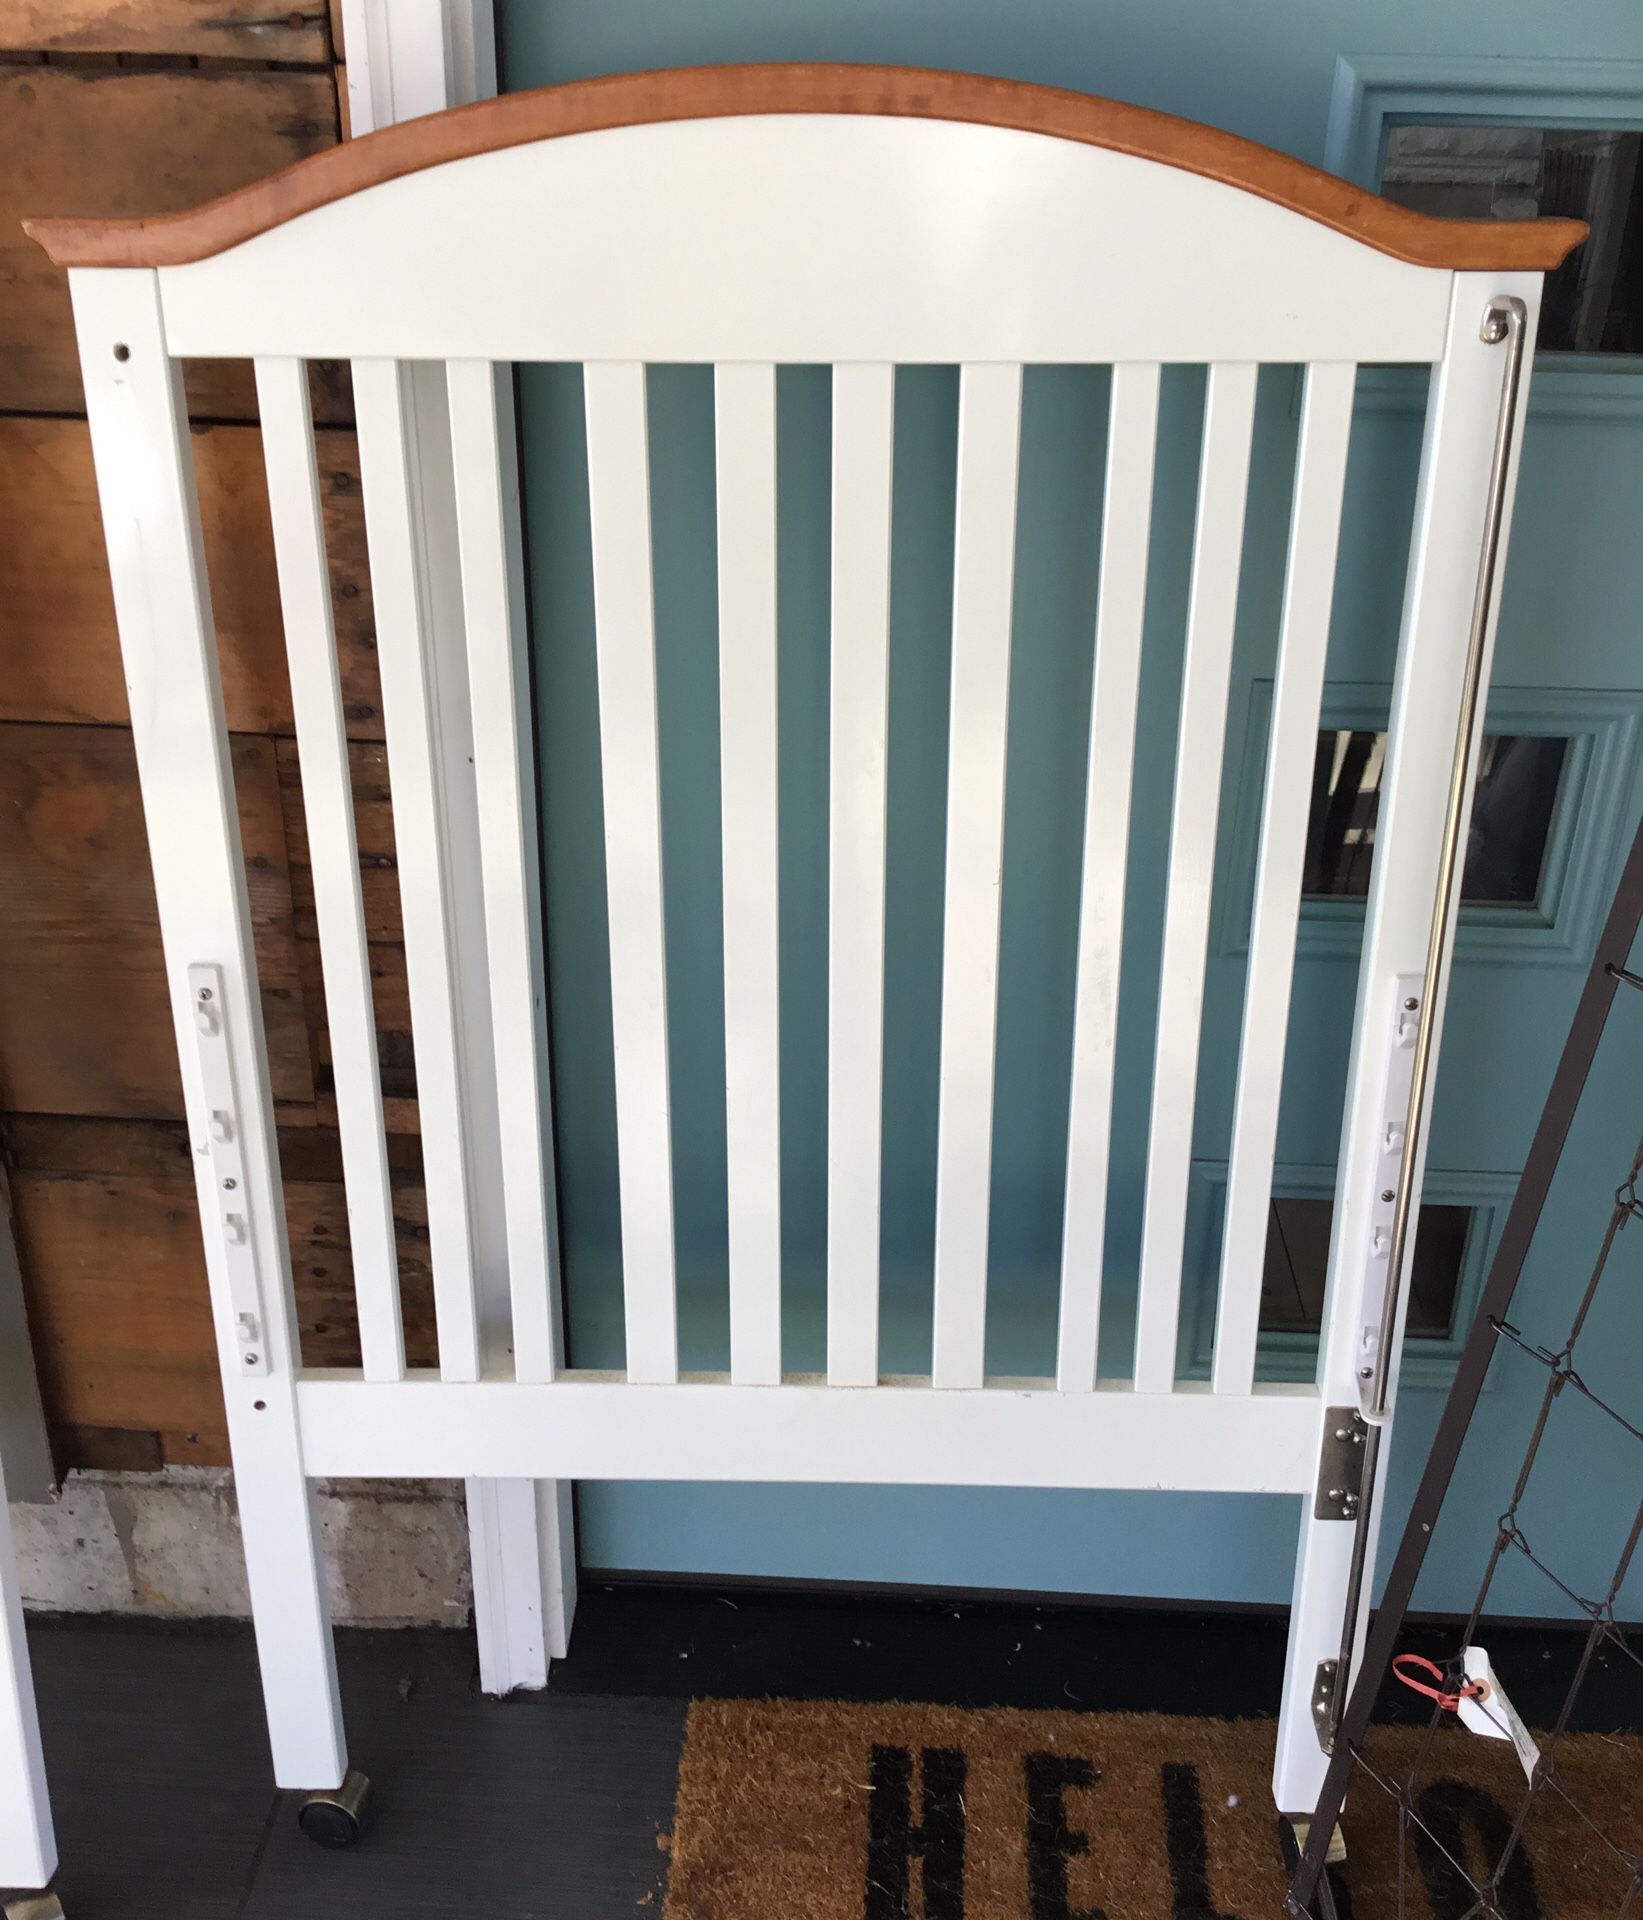 White Crib with Mattress